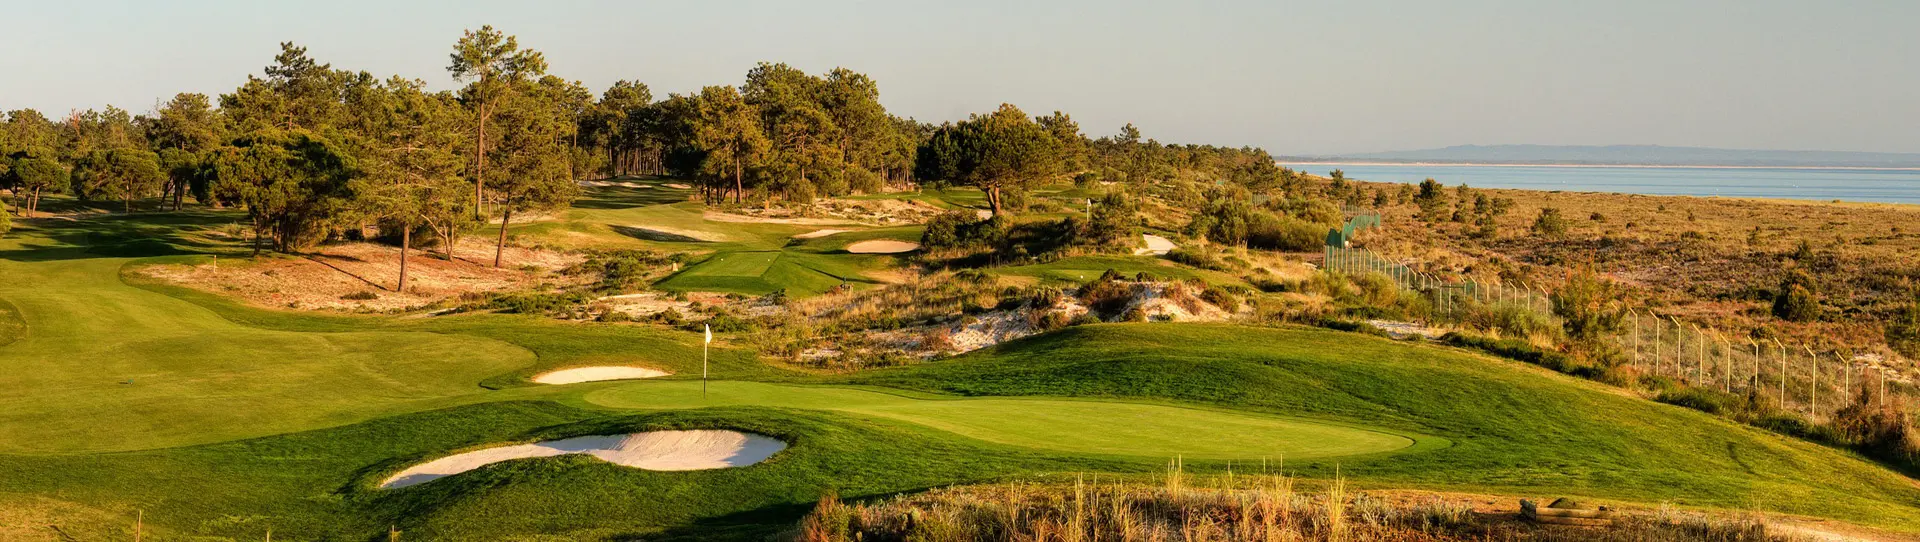 Portugal golf courses - Troia Golf Course - Photo 1